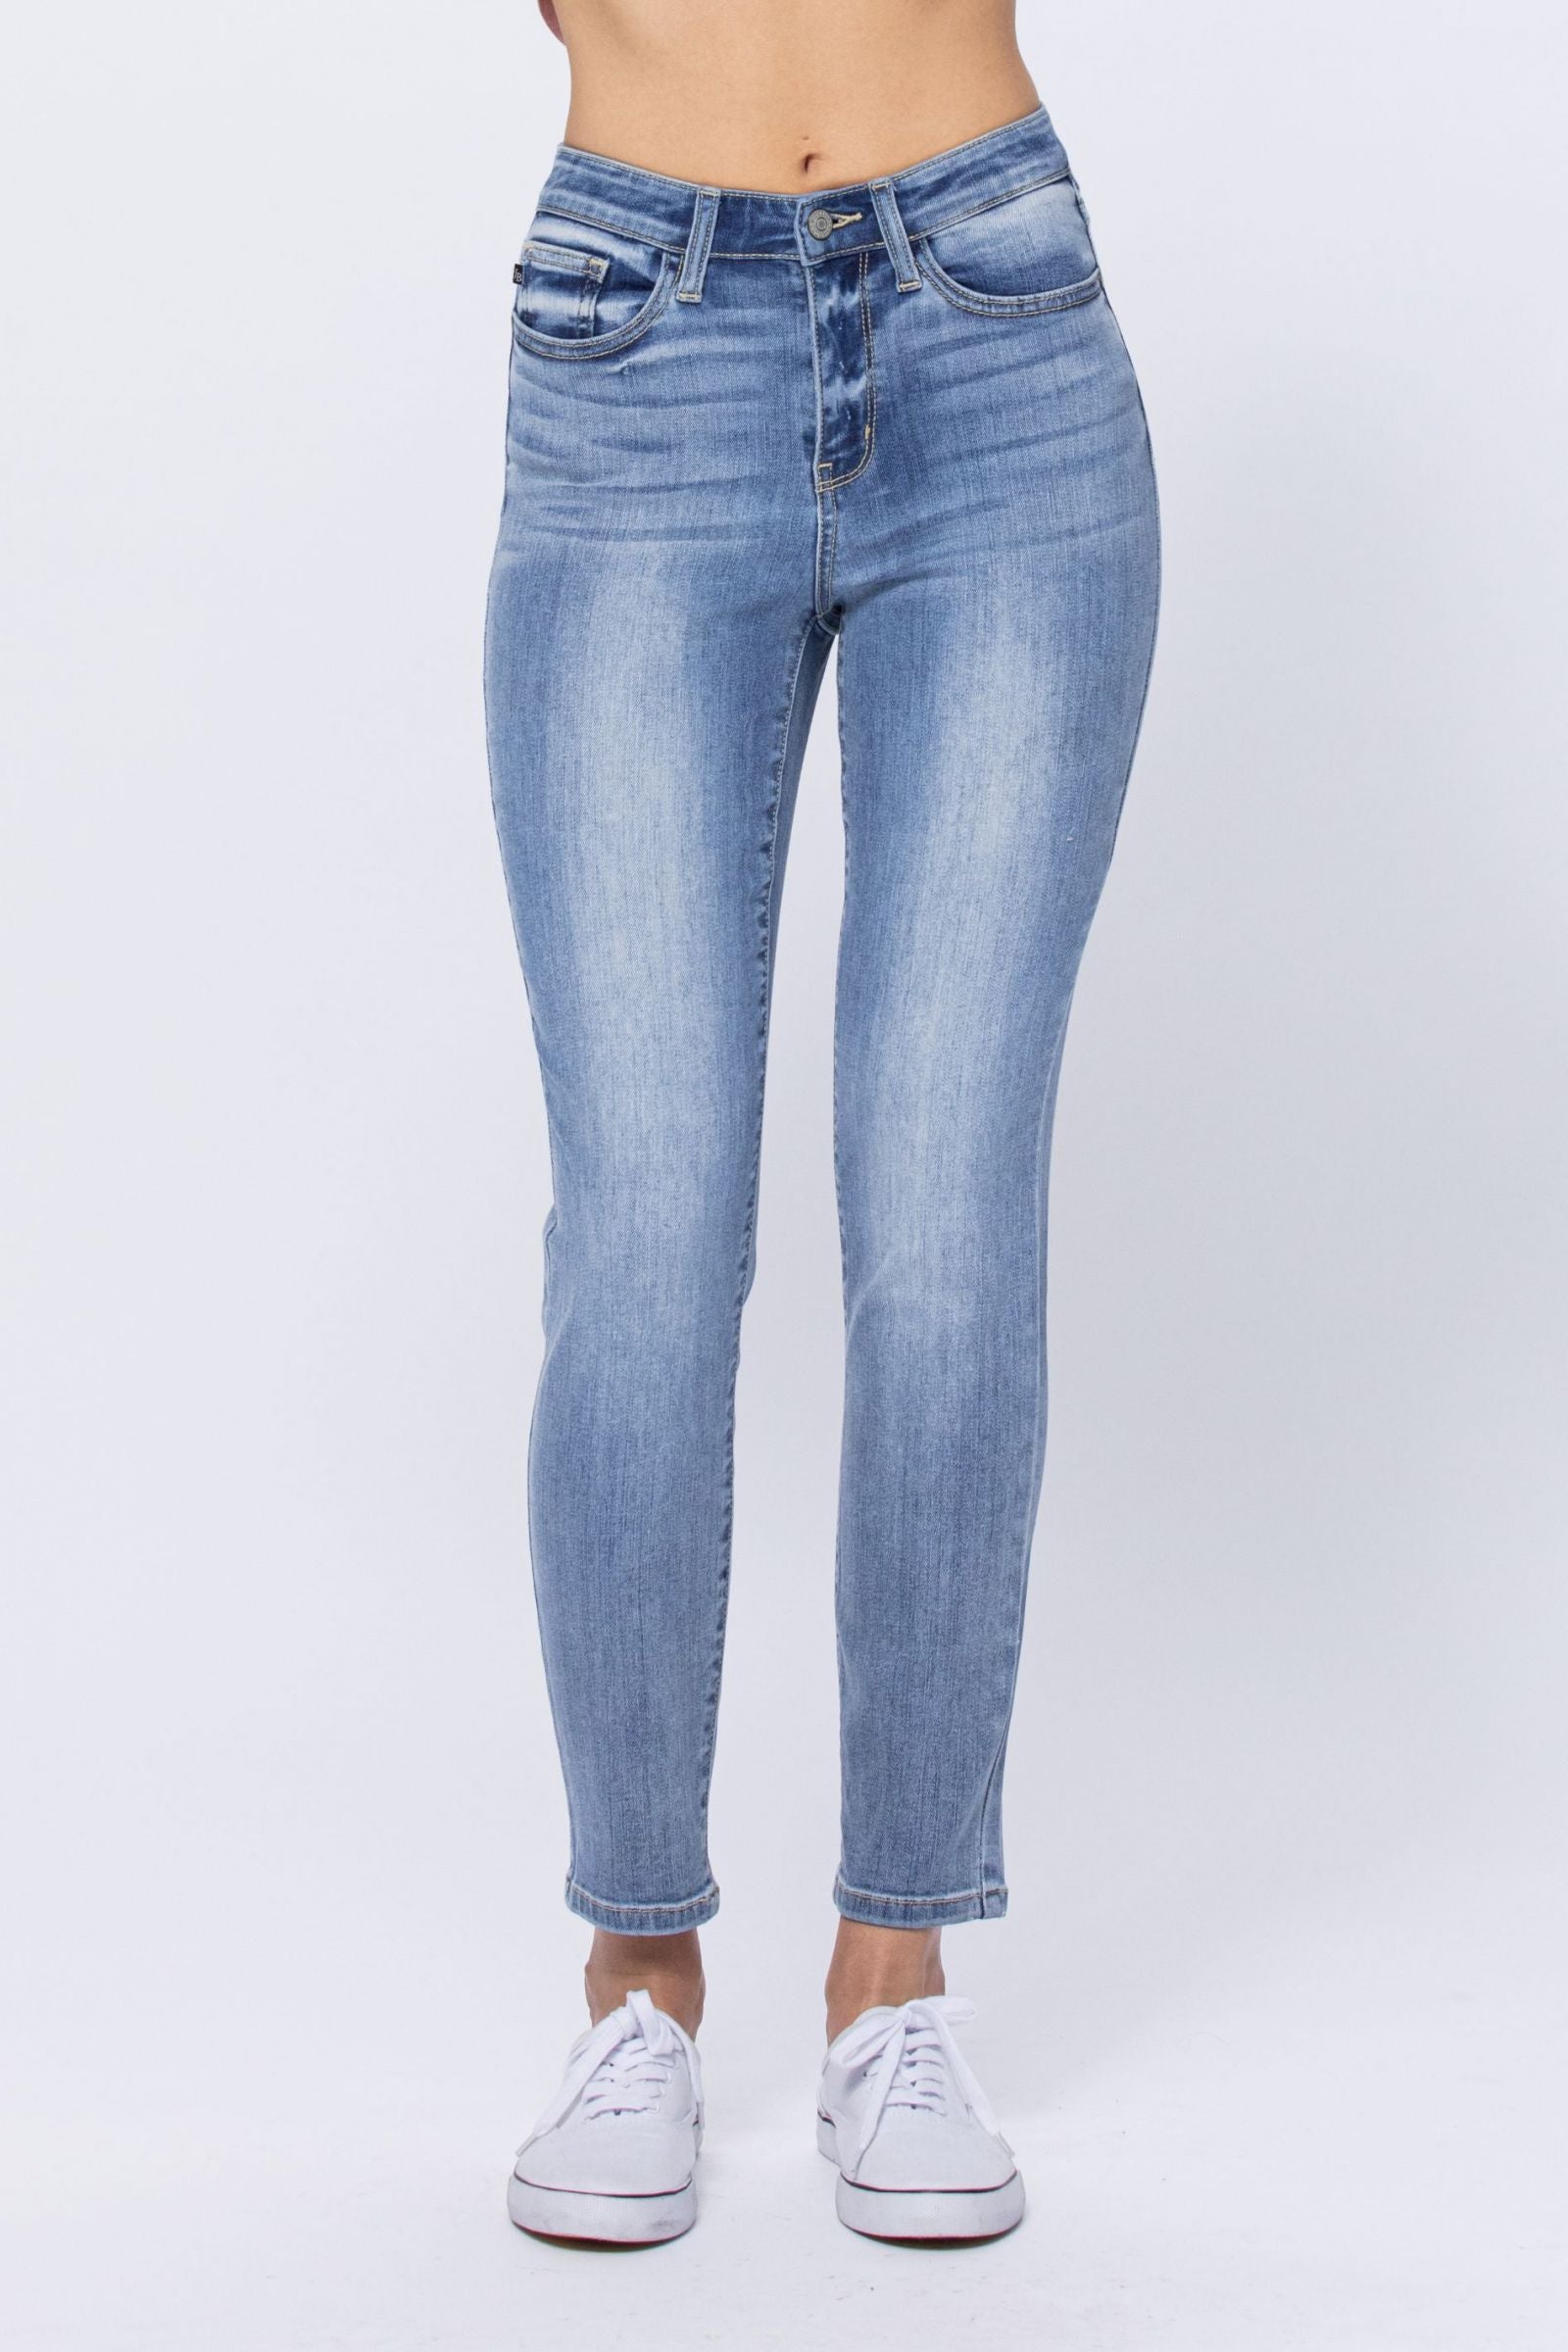 Judy Blue® DONITA Jeans